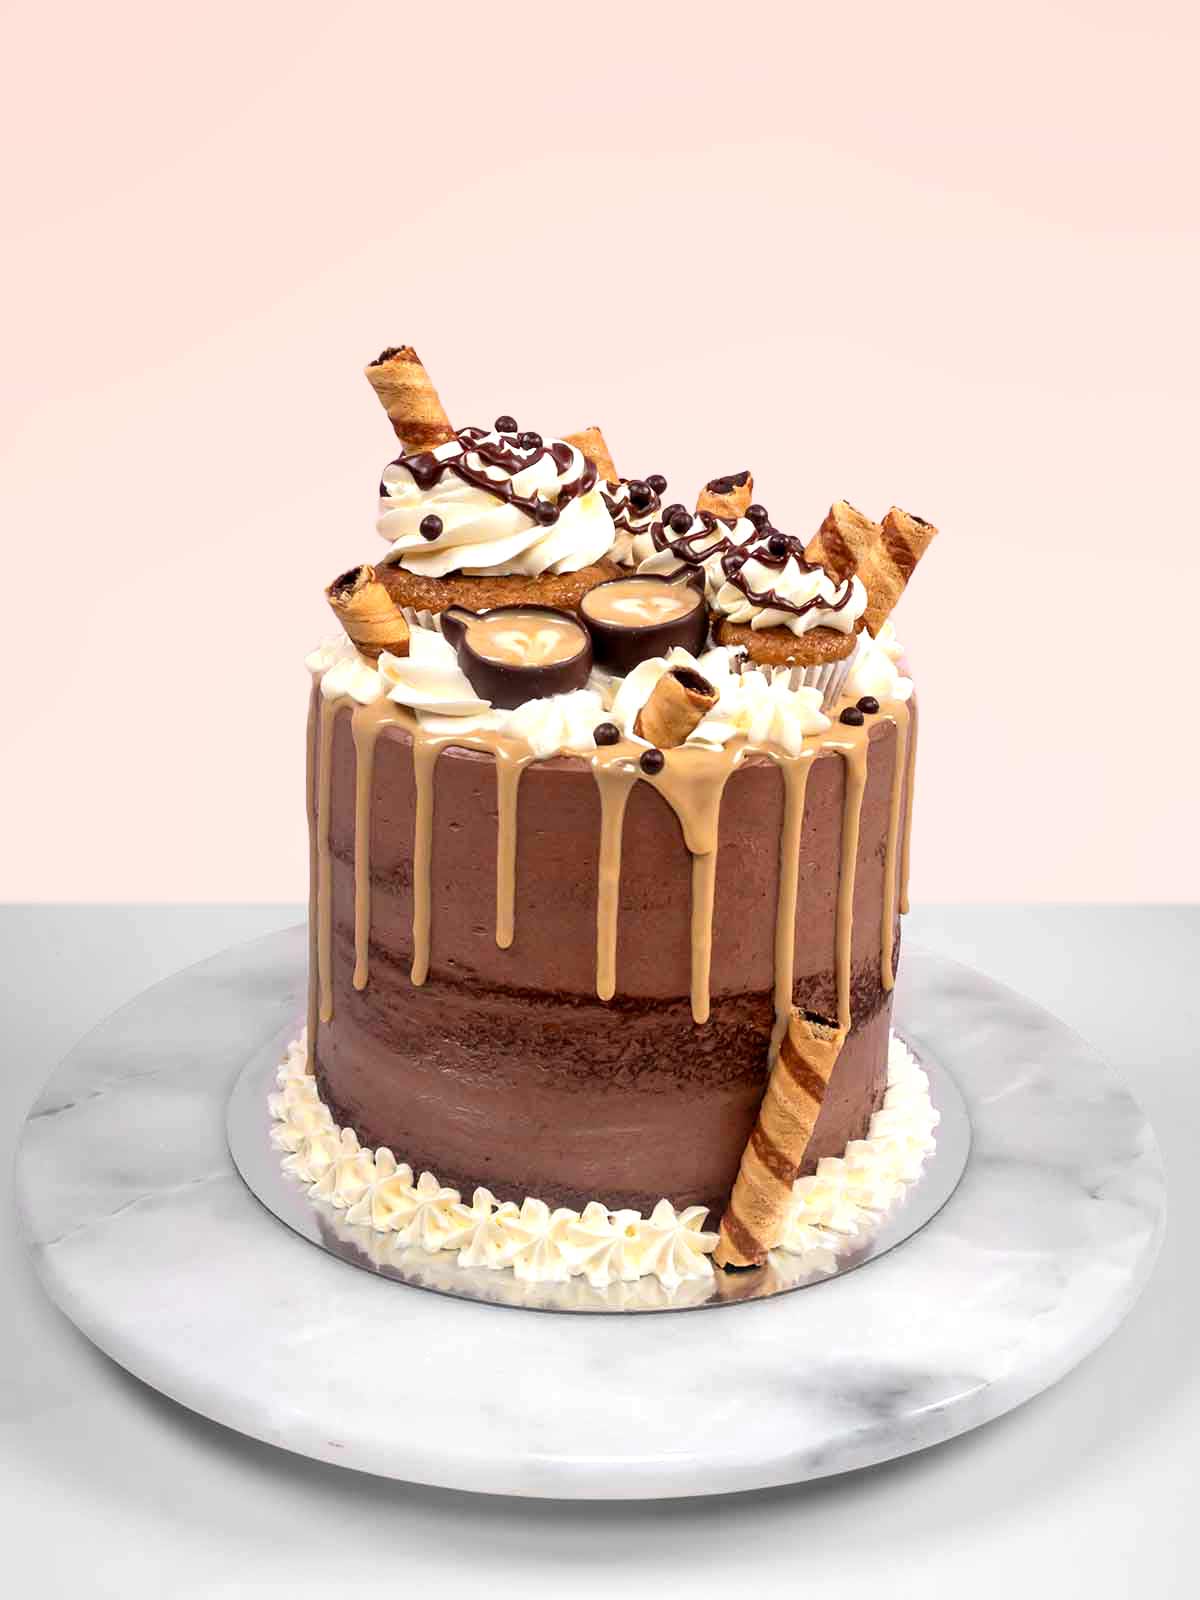 Cakes by Carolyne - 40th Birthday cake - whiskey barrel | Facebook